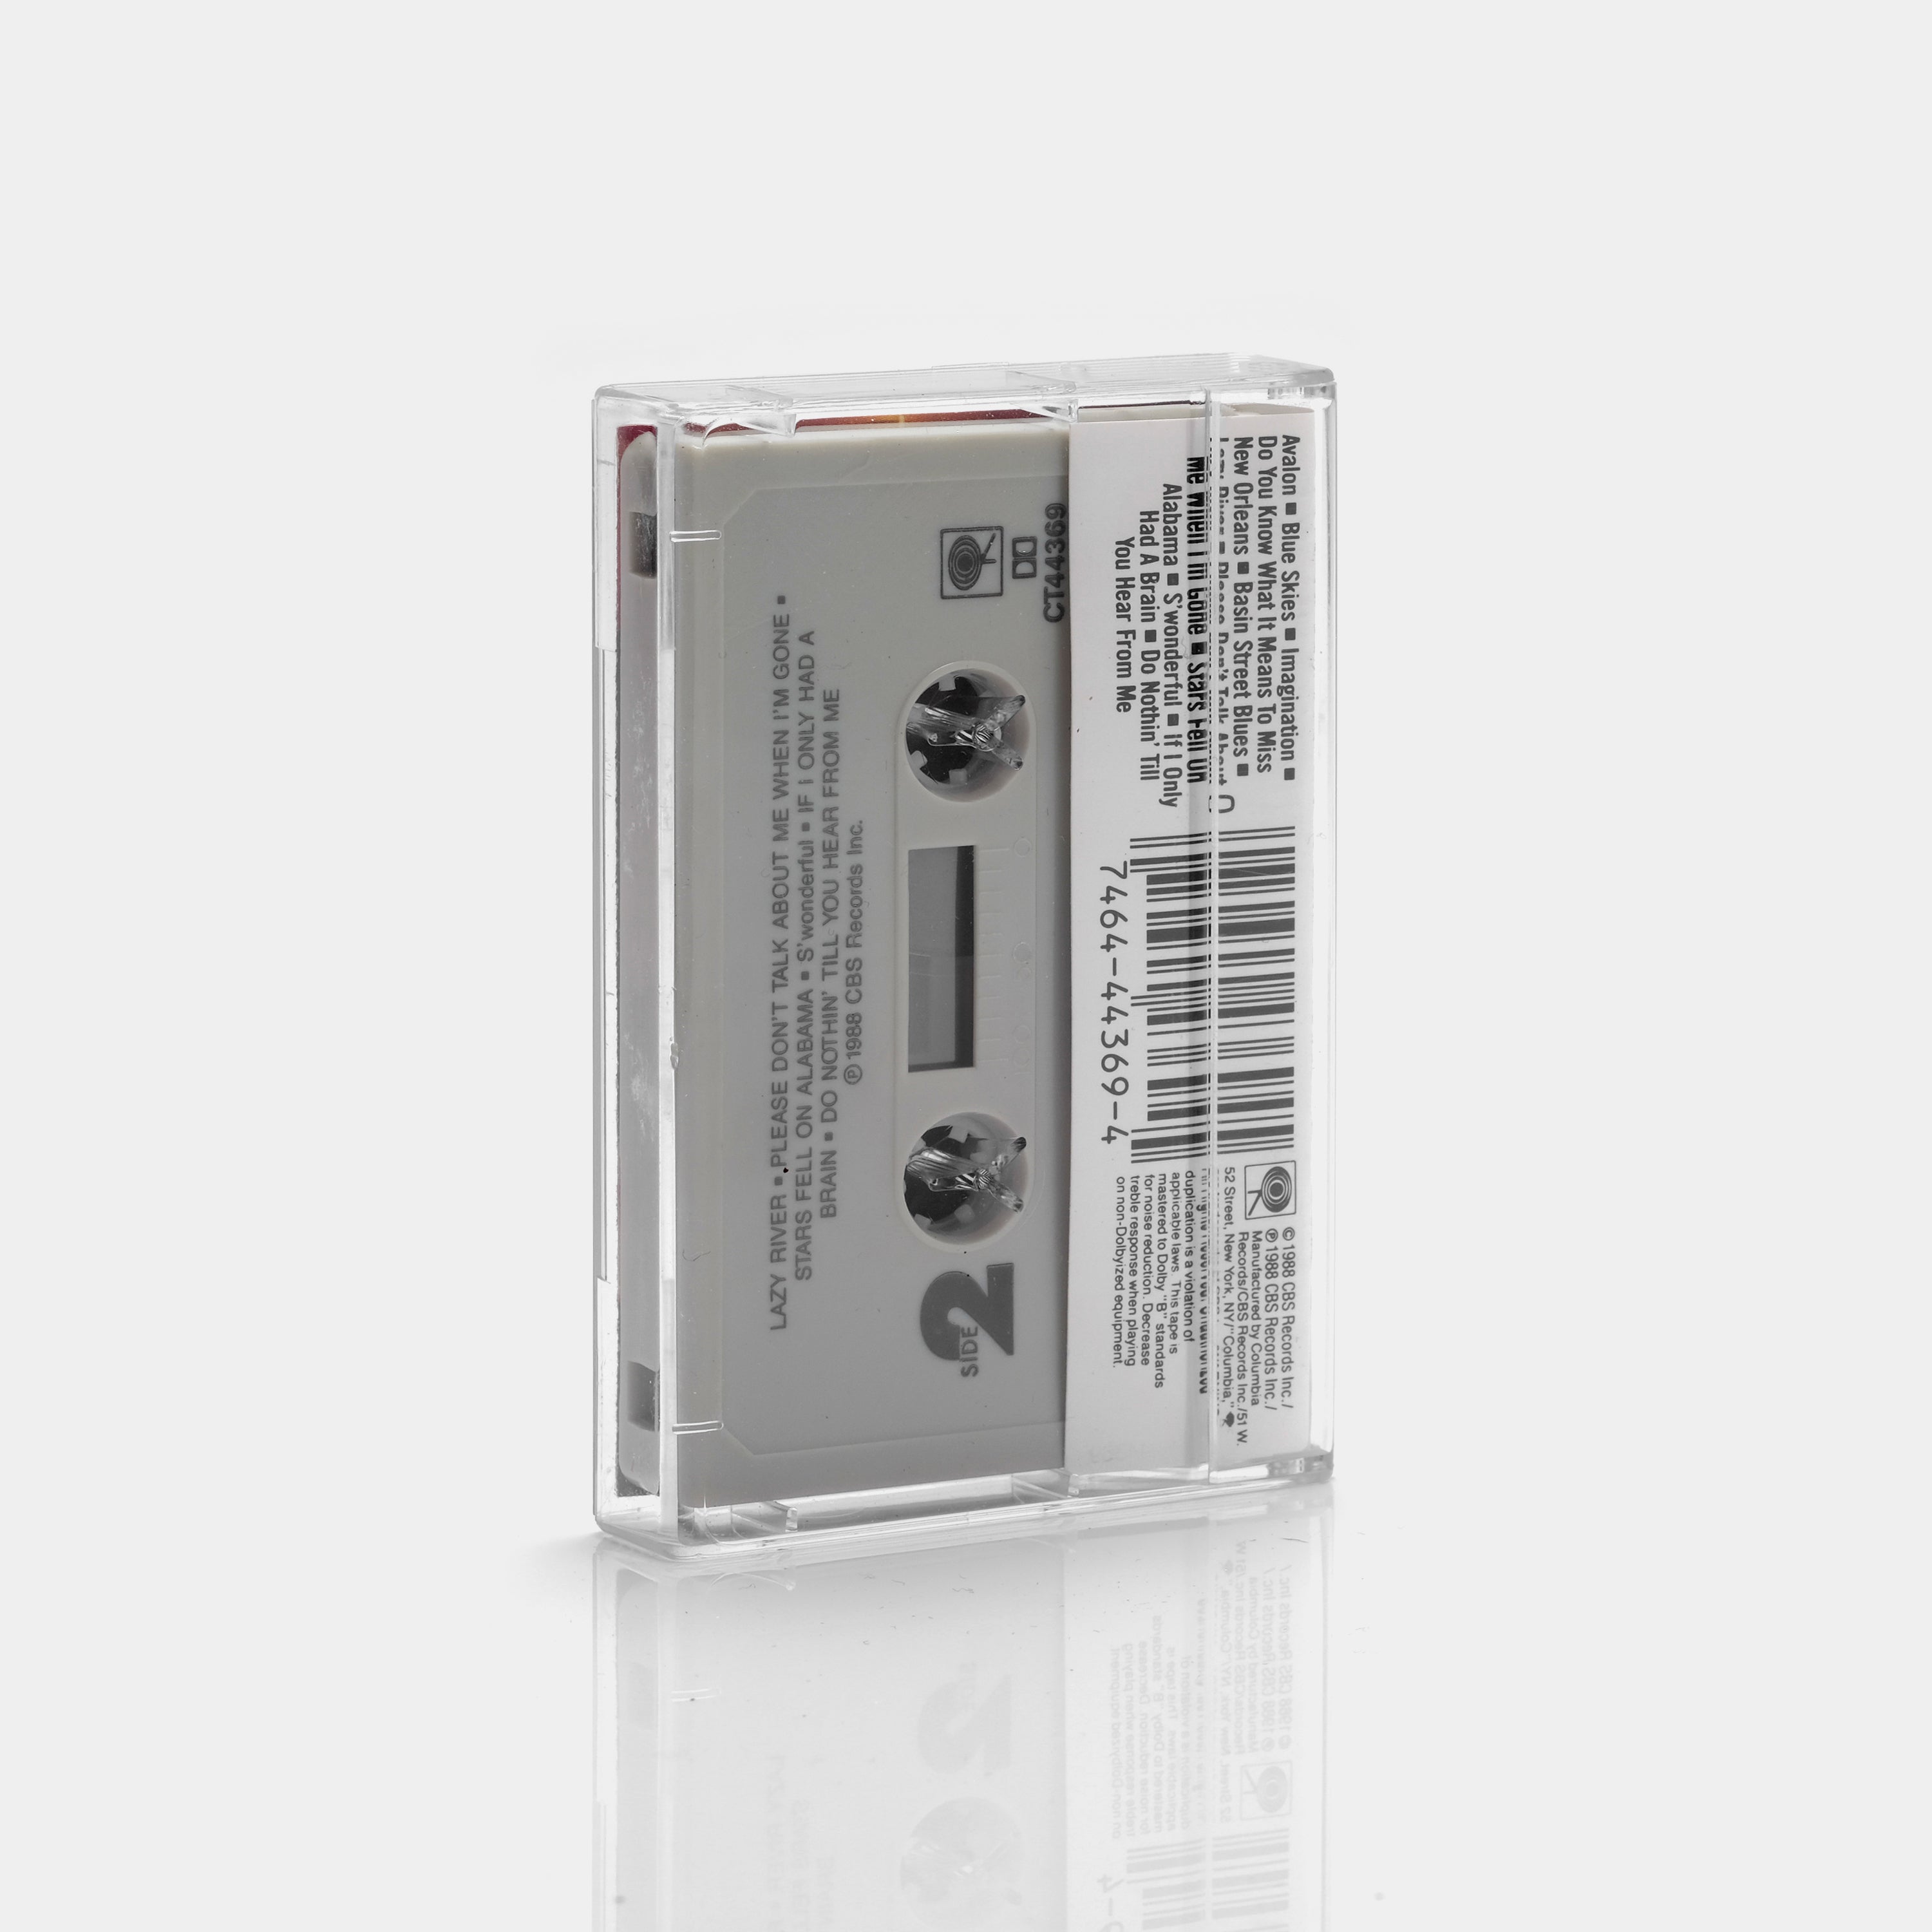 Harry Connick, Jr. - 20 Cassette Tape